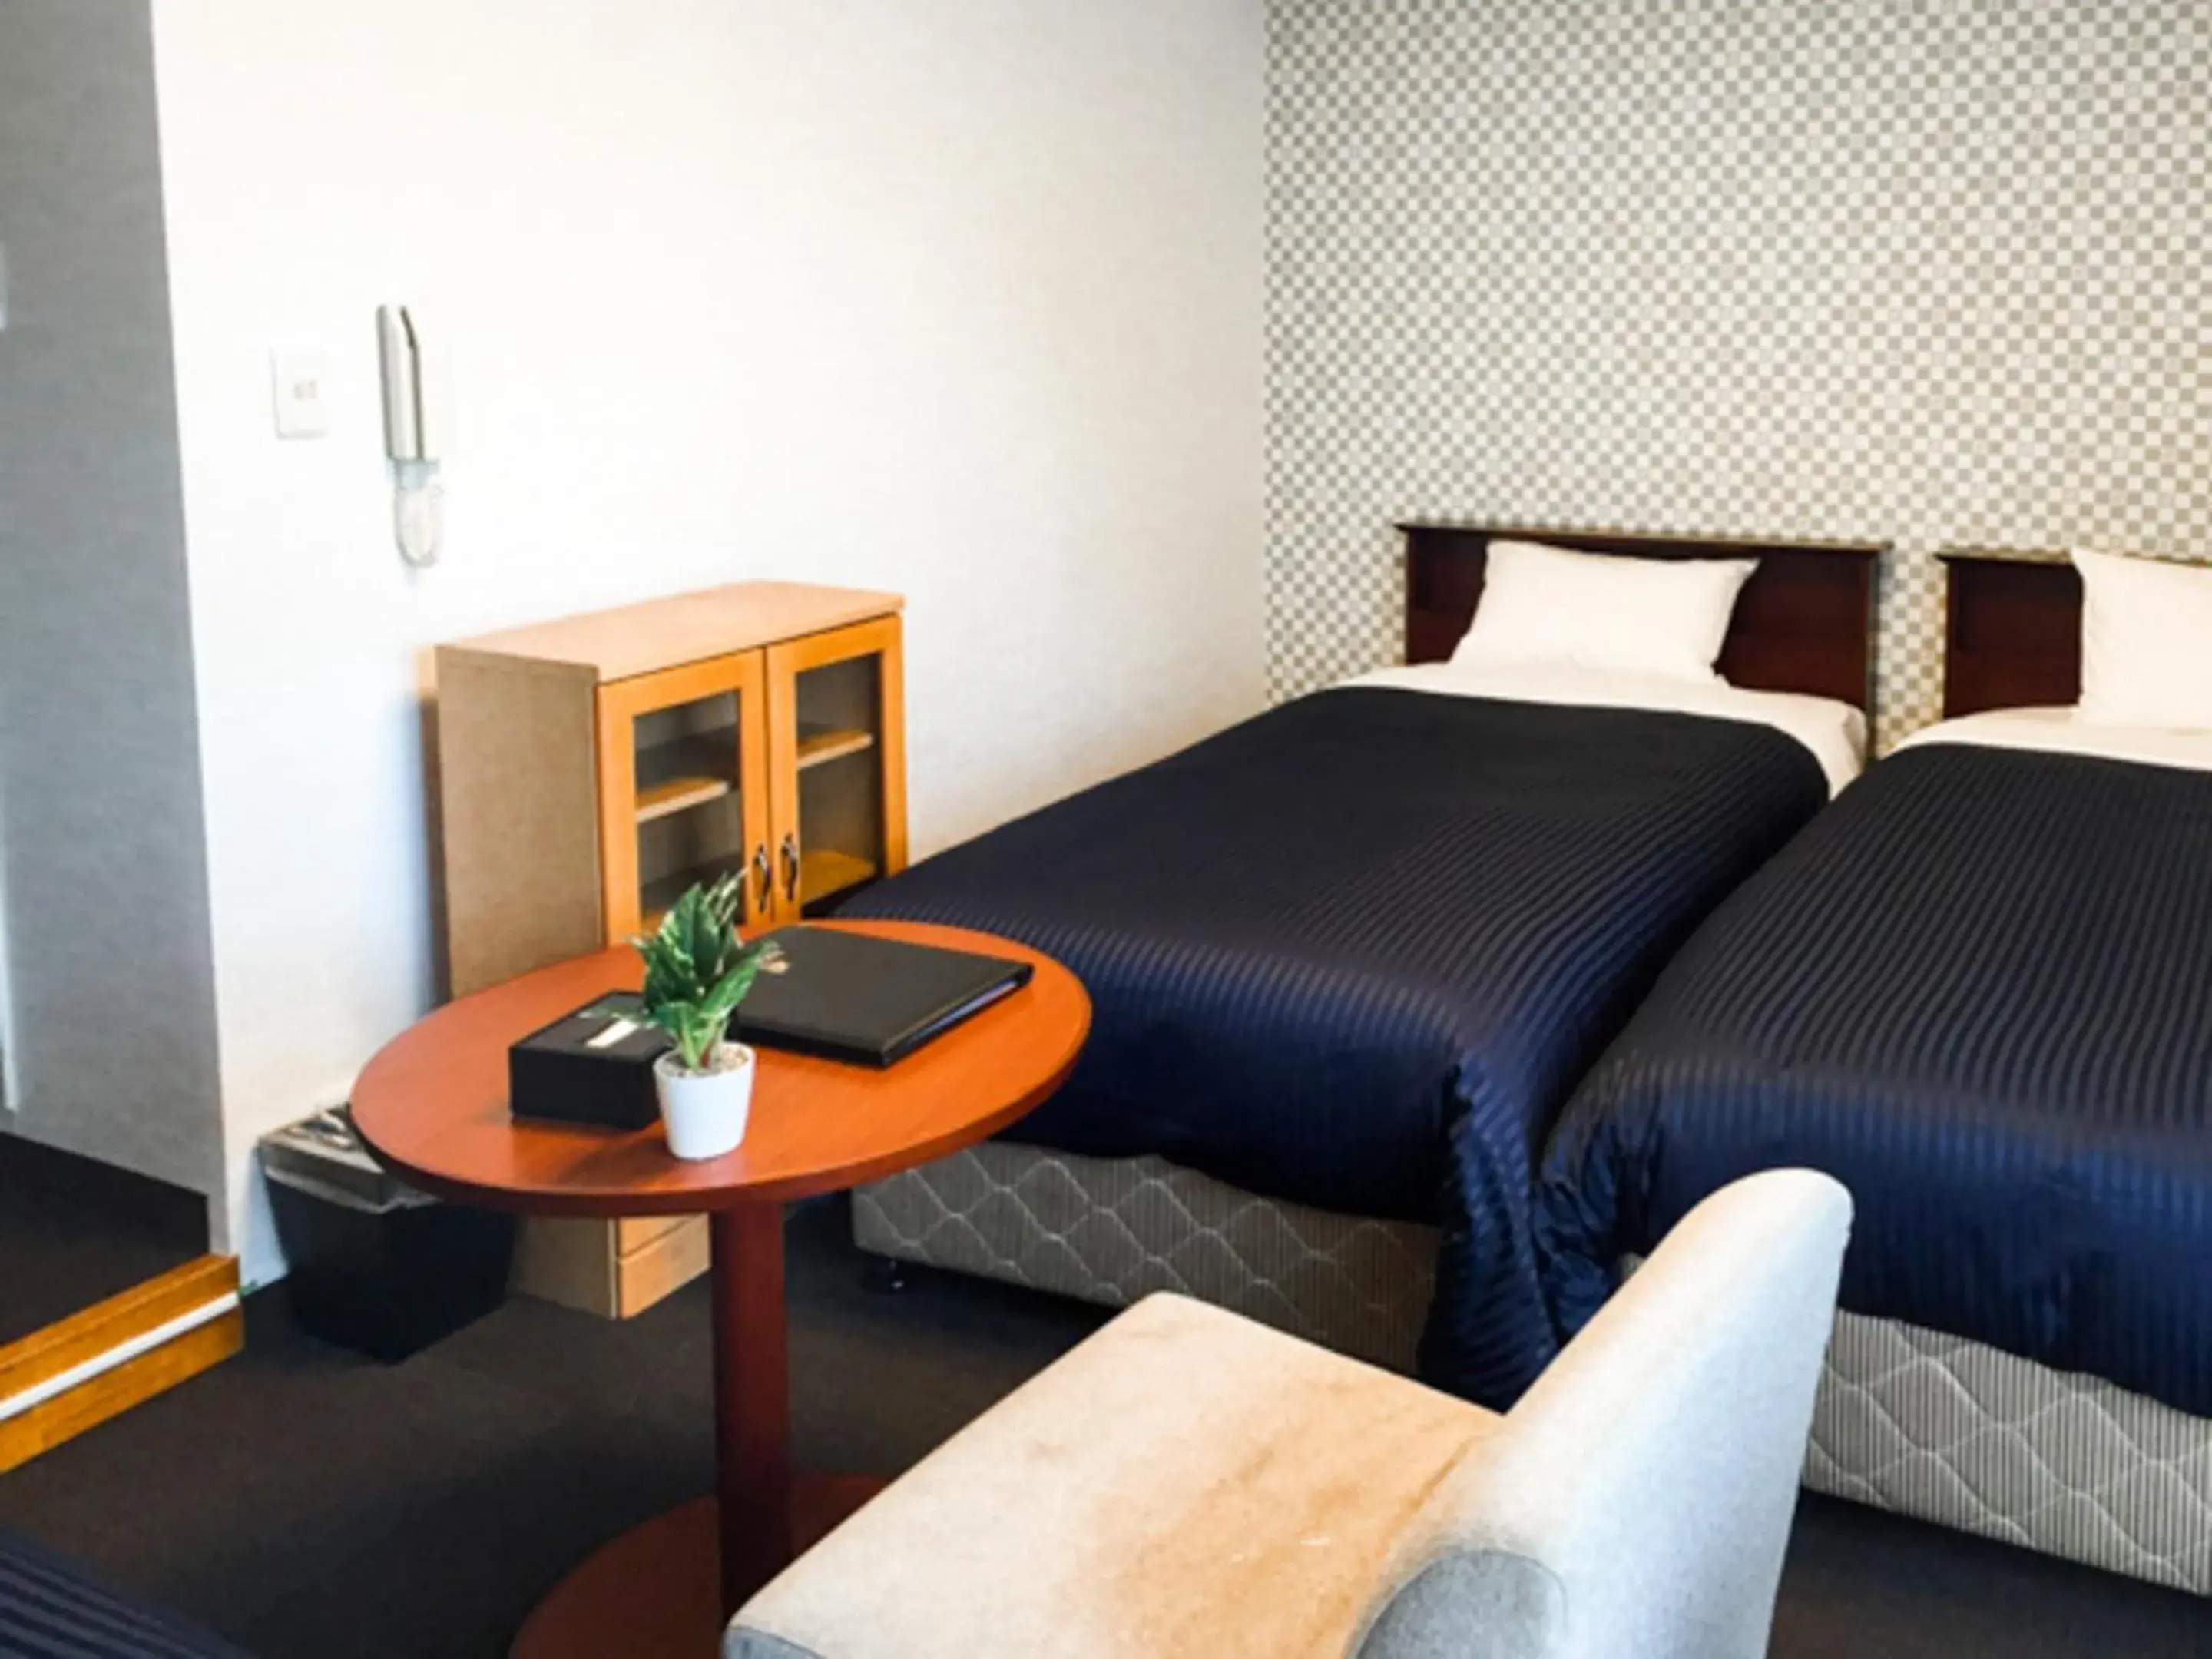 Bed in HOTEL LiVEMAX BUDGET Fuchu